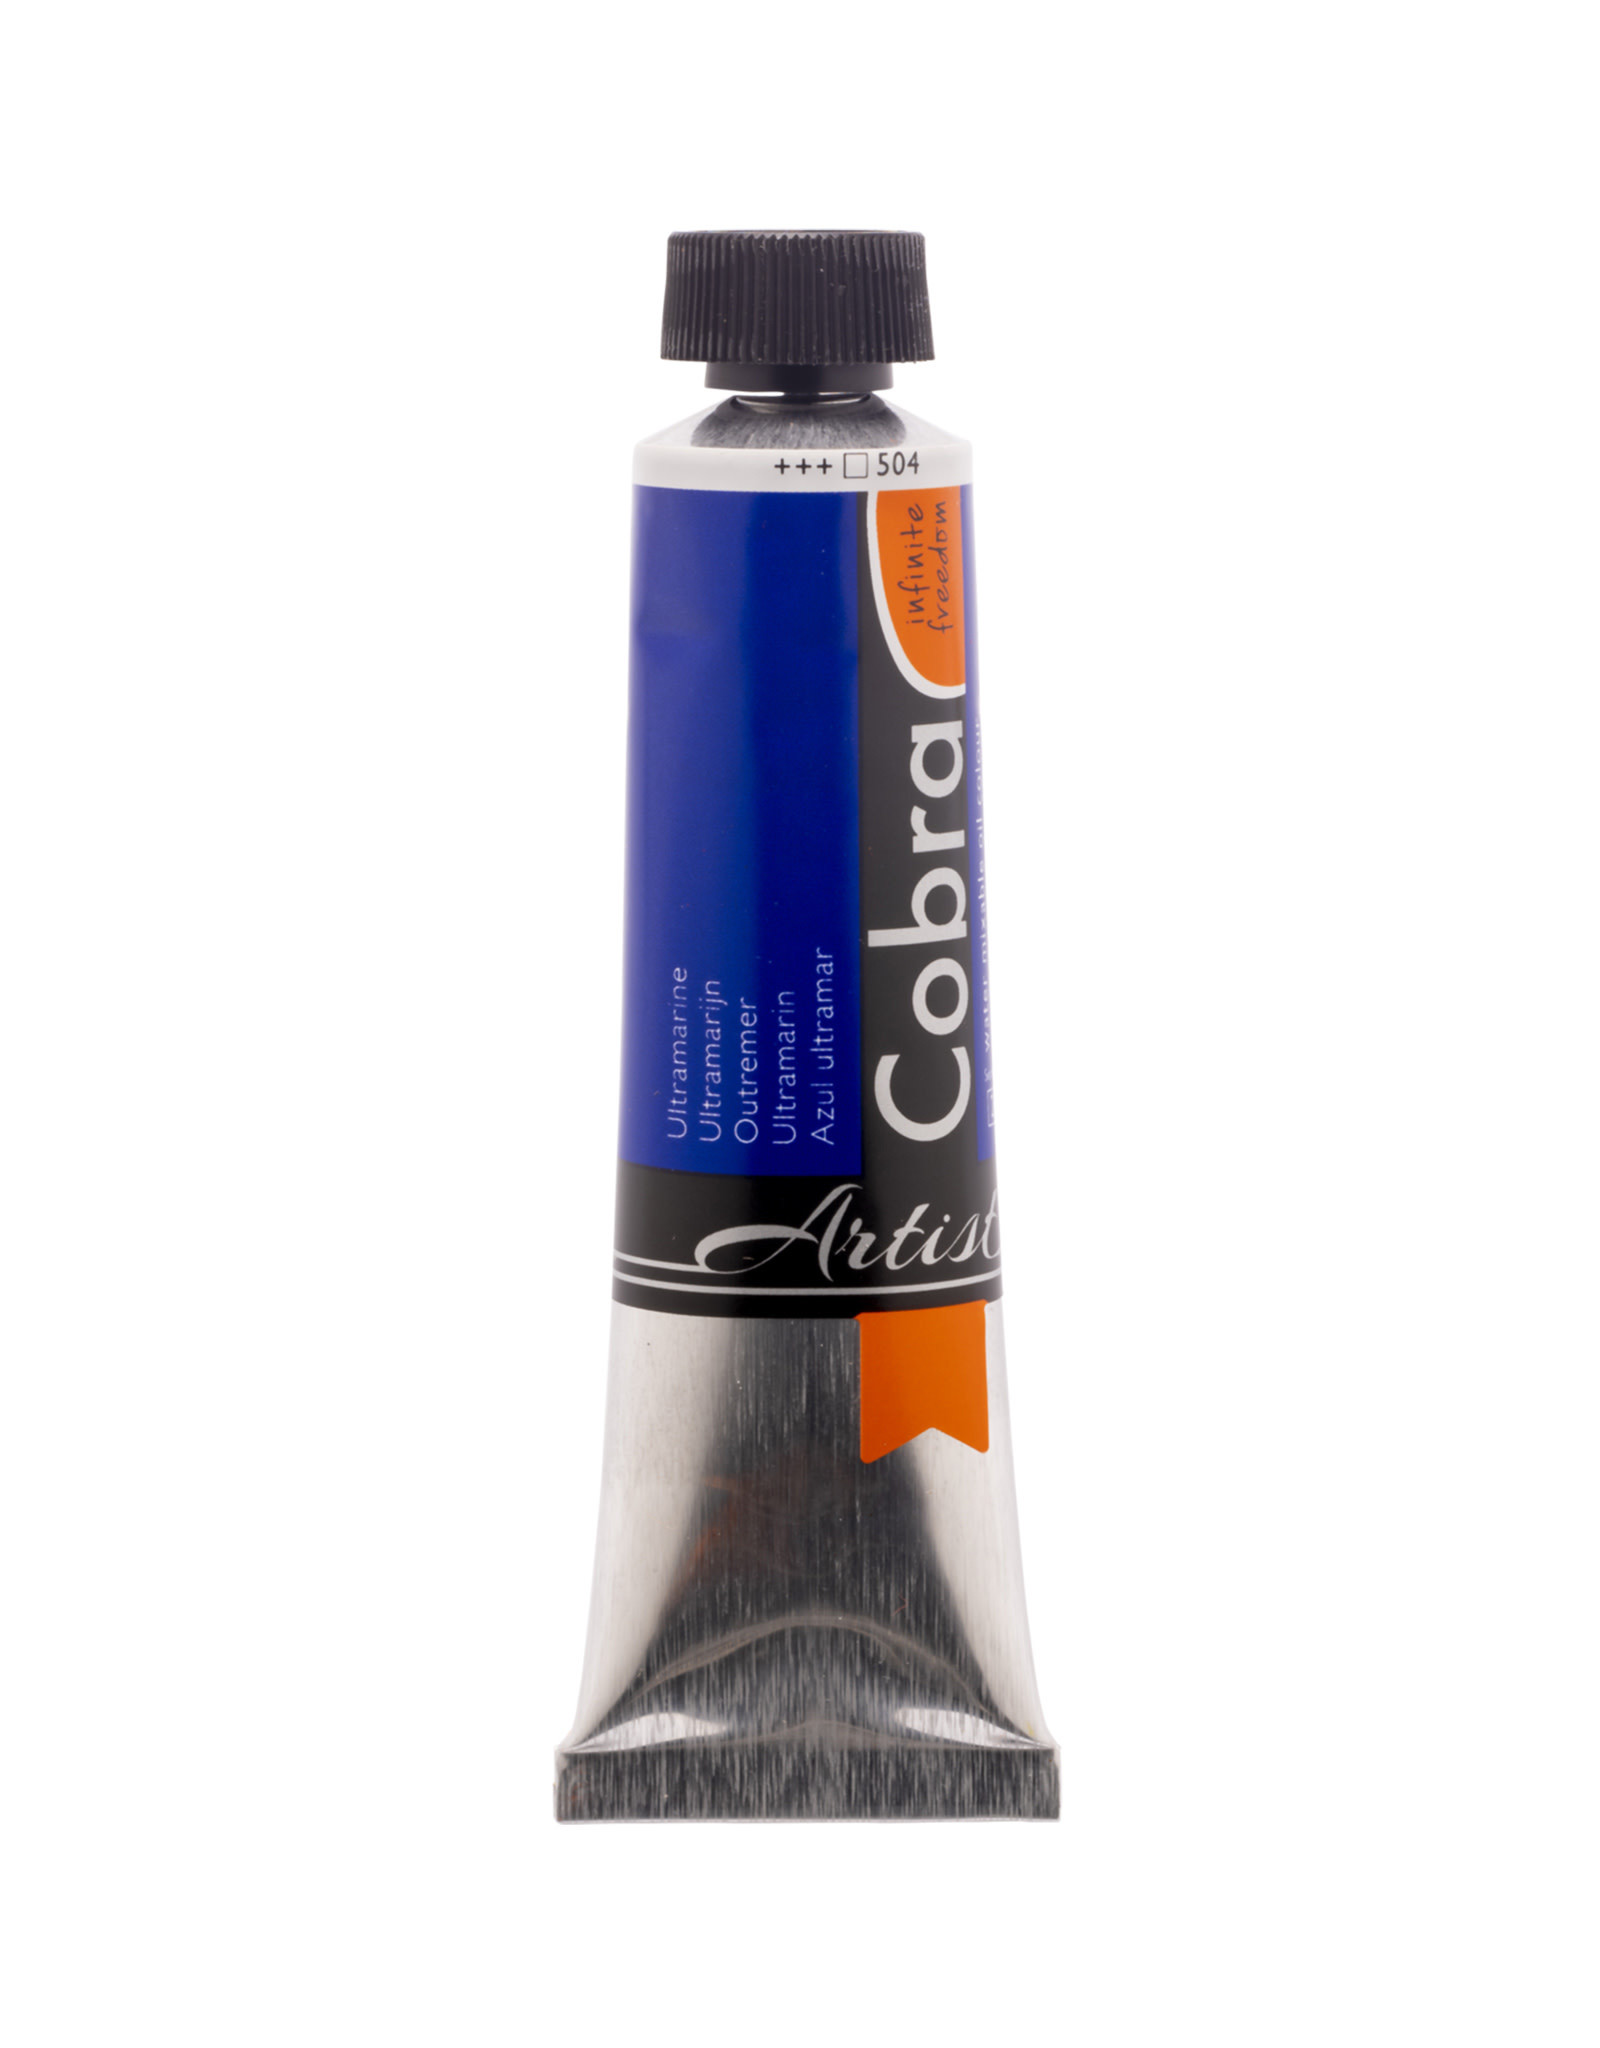 Royal Talens Cobra Water Mixable Artist Oils, Ultramarine 40ml